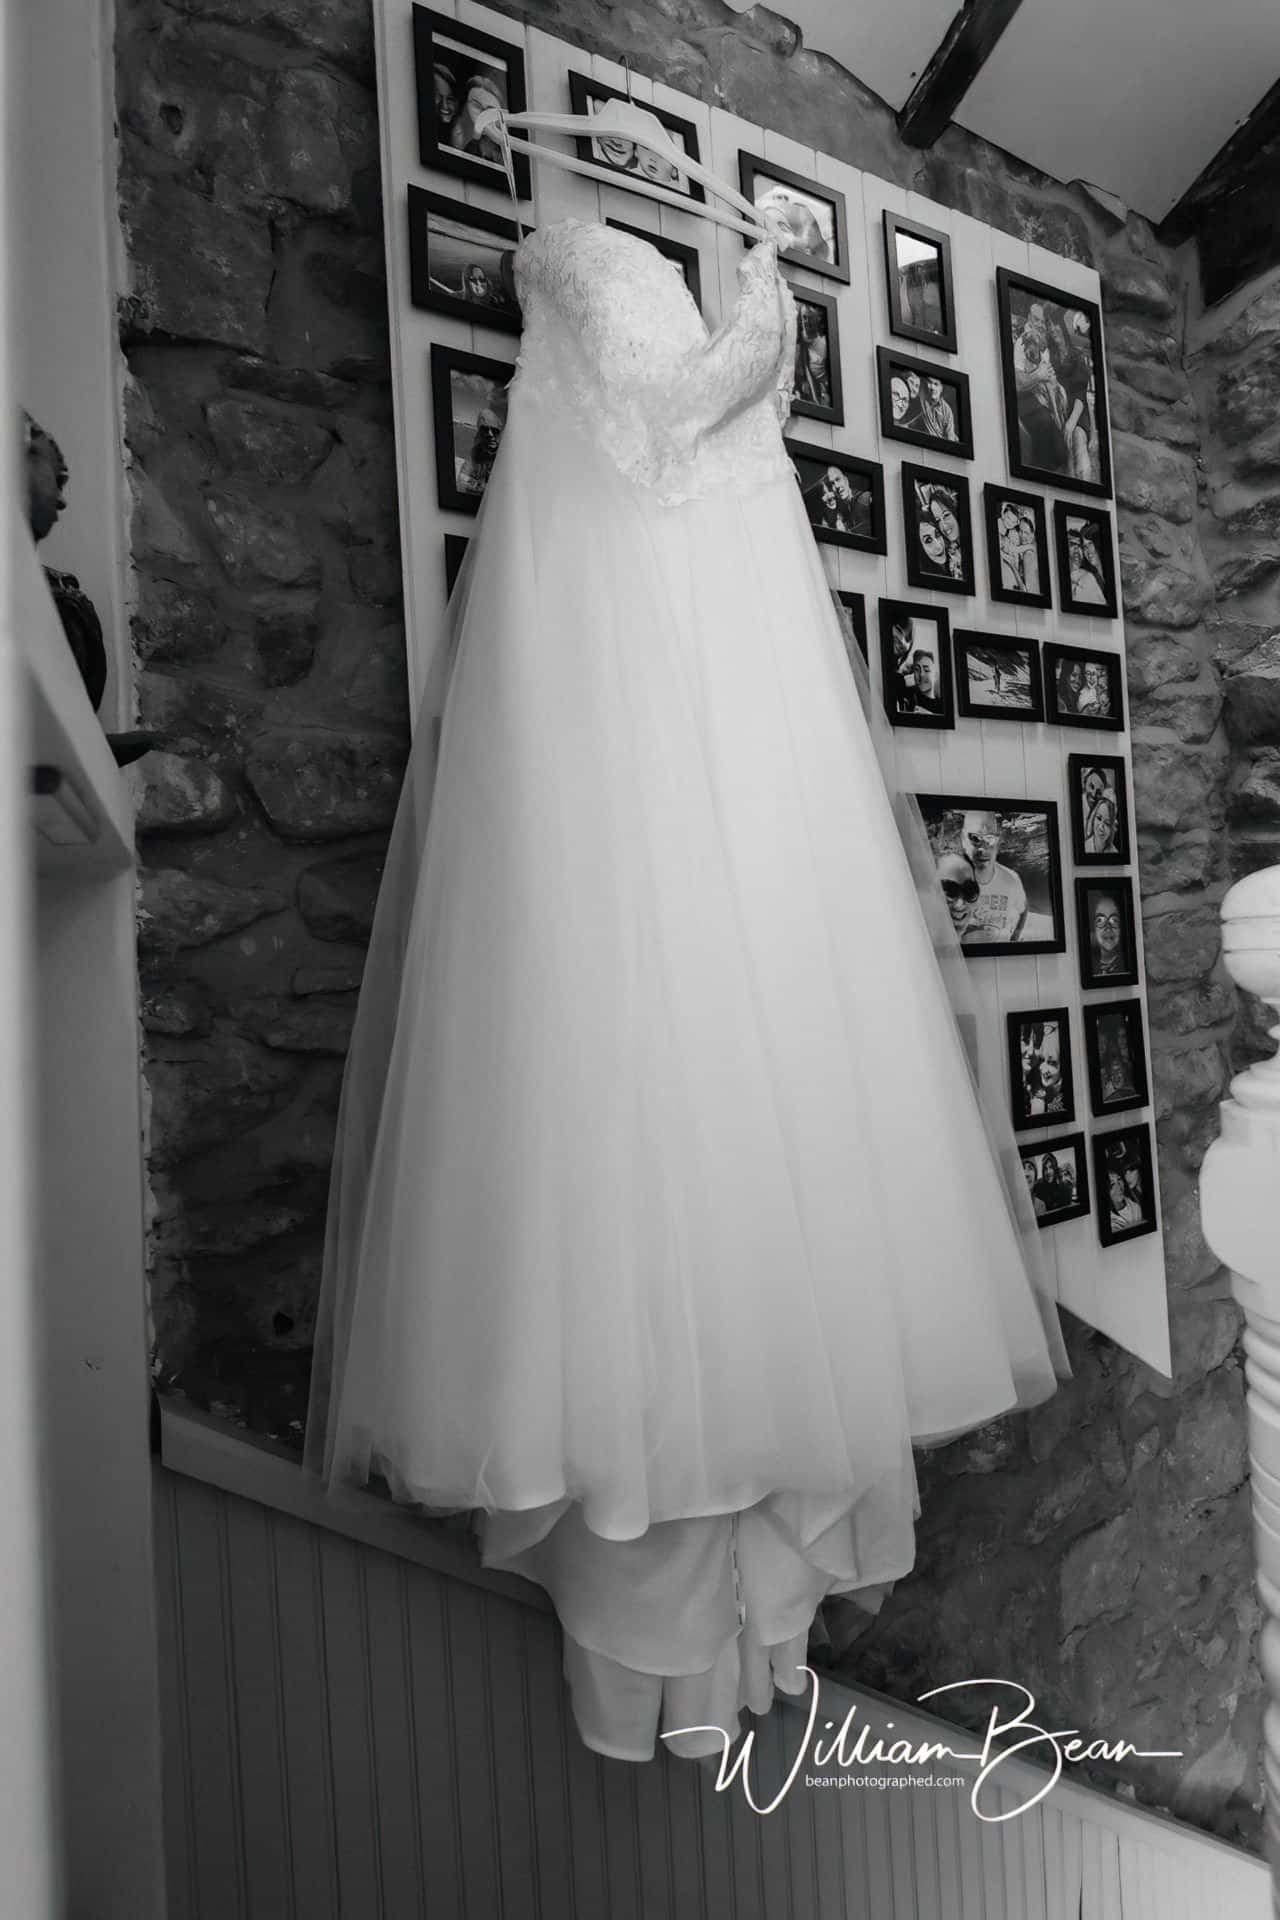 024-wedding-photographer-osmotherley-north-yorkshire